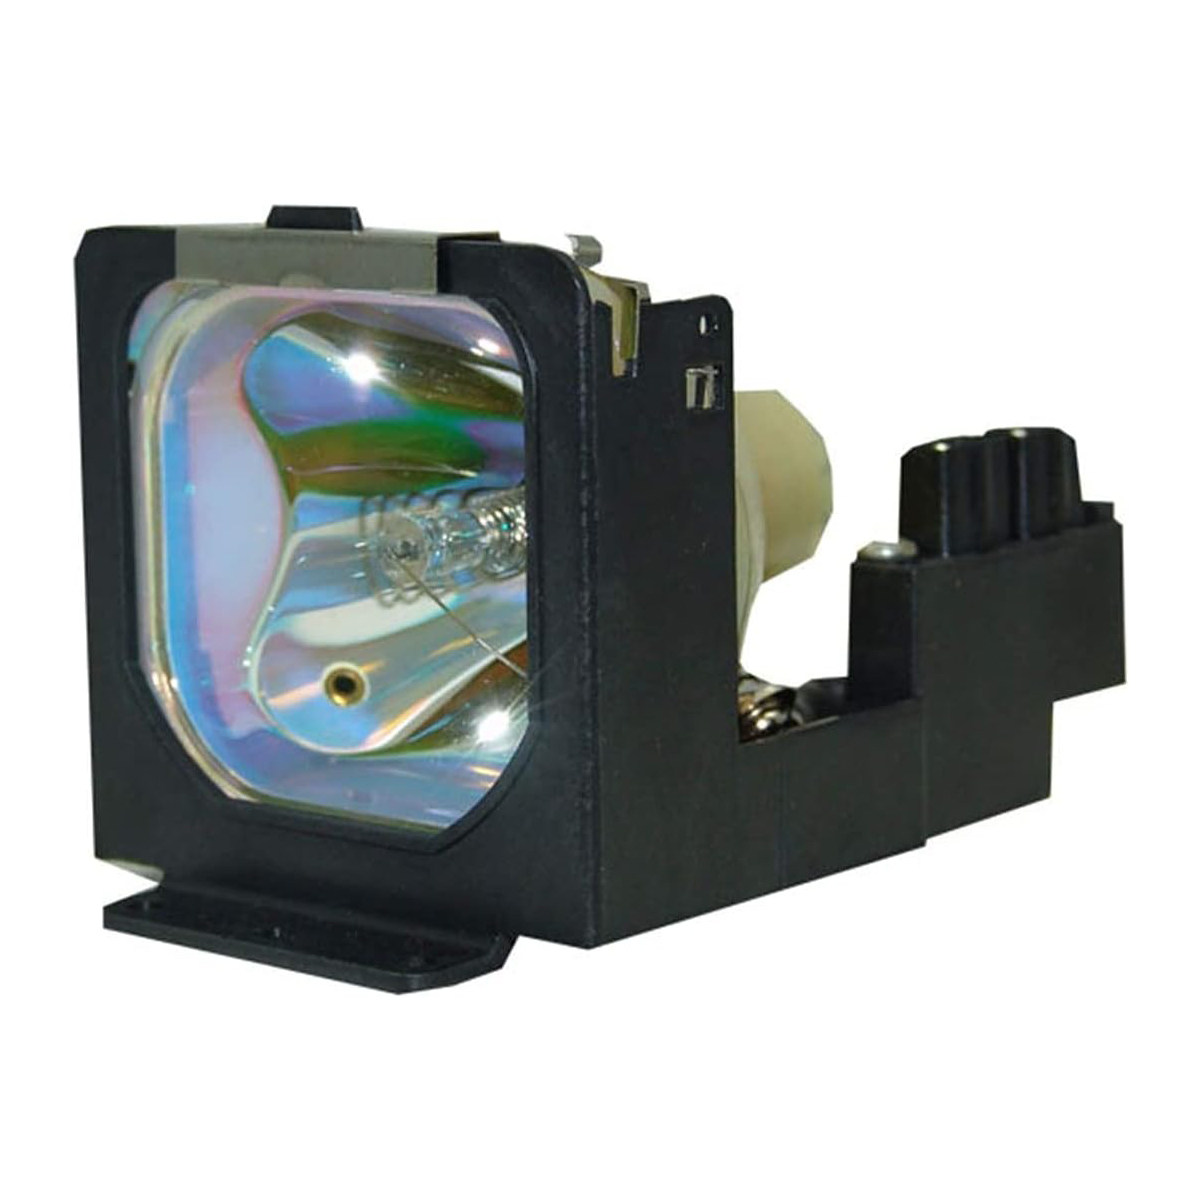 Replacement Projector lamp LV-LP10/6986A001AA For CANON LV-5100 /LV-5110/ LV-51X0(E) /LV-7100e